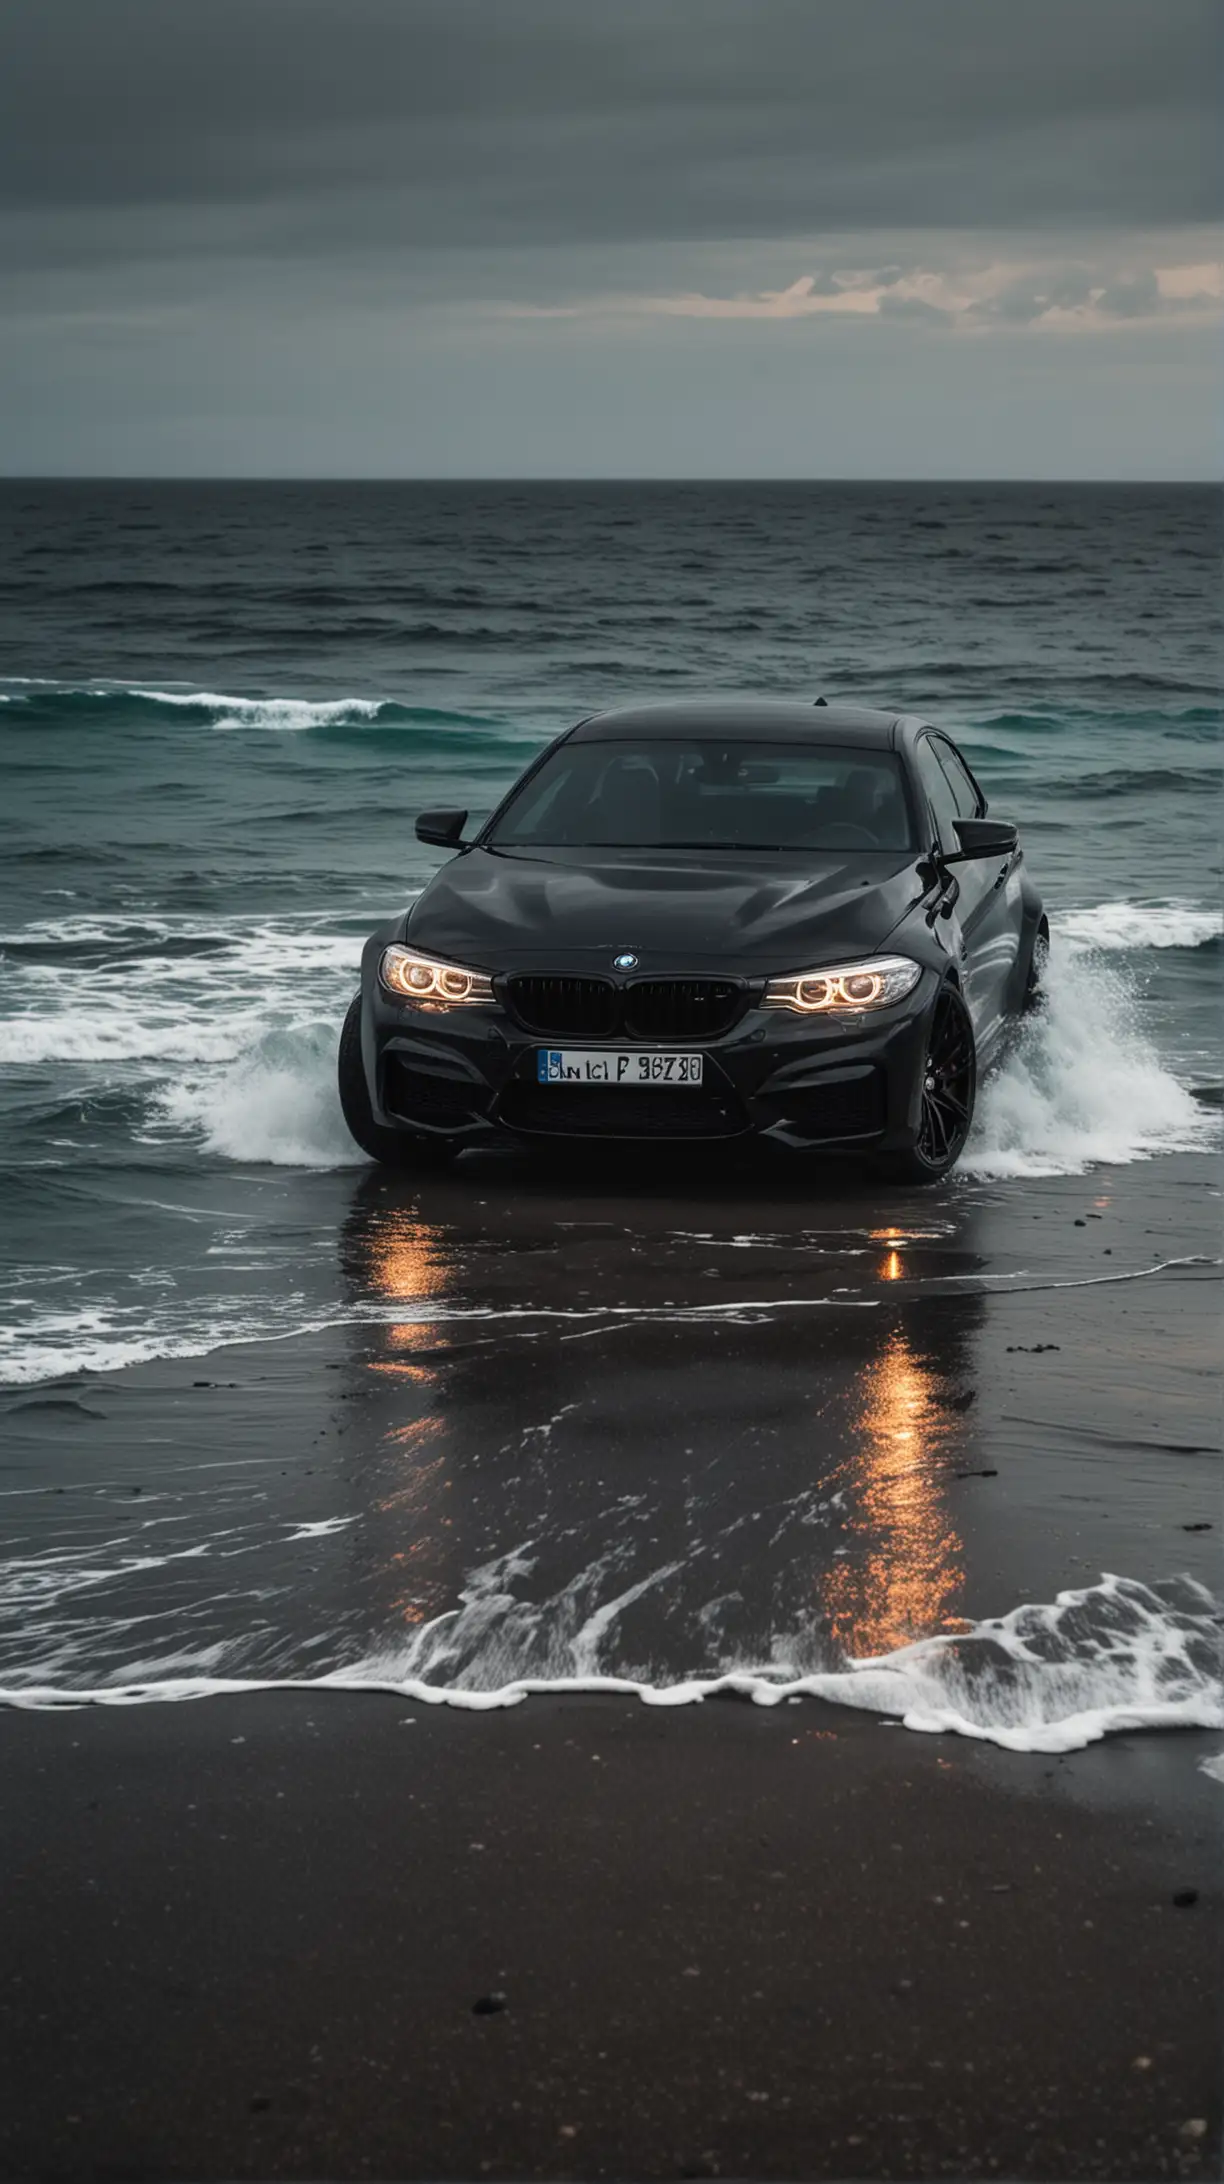 Sleek Black BMW with Illuminated Headlights Against Ocean Backdrop